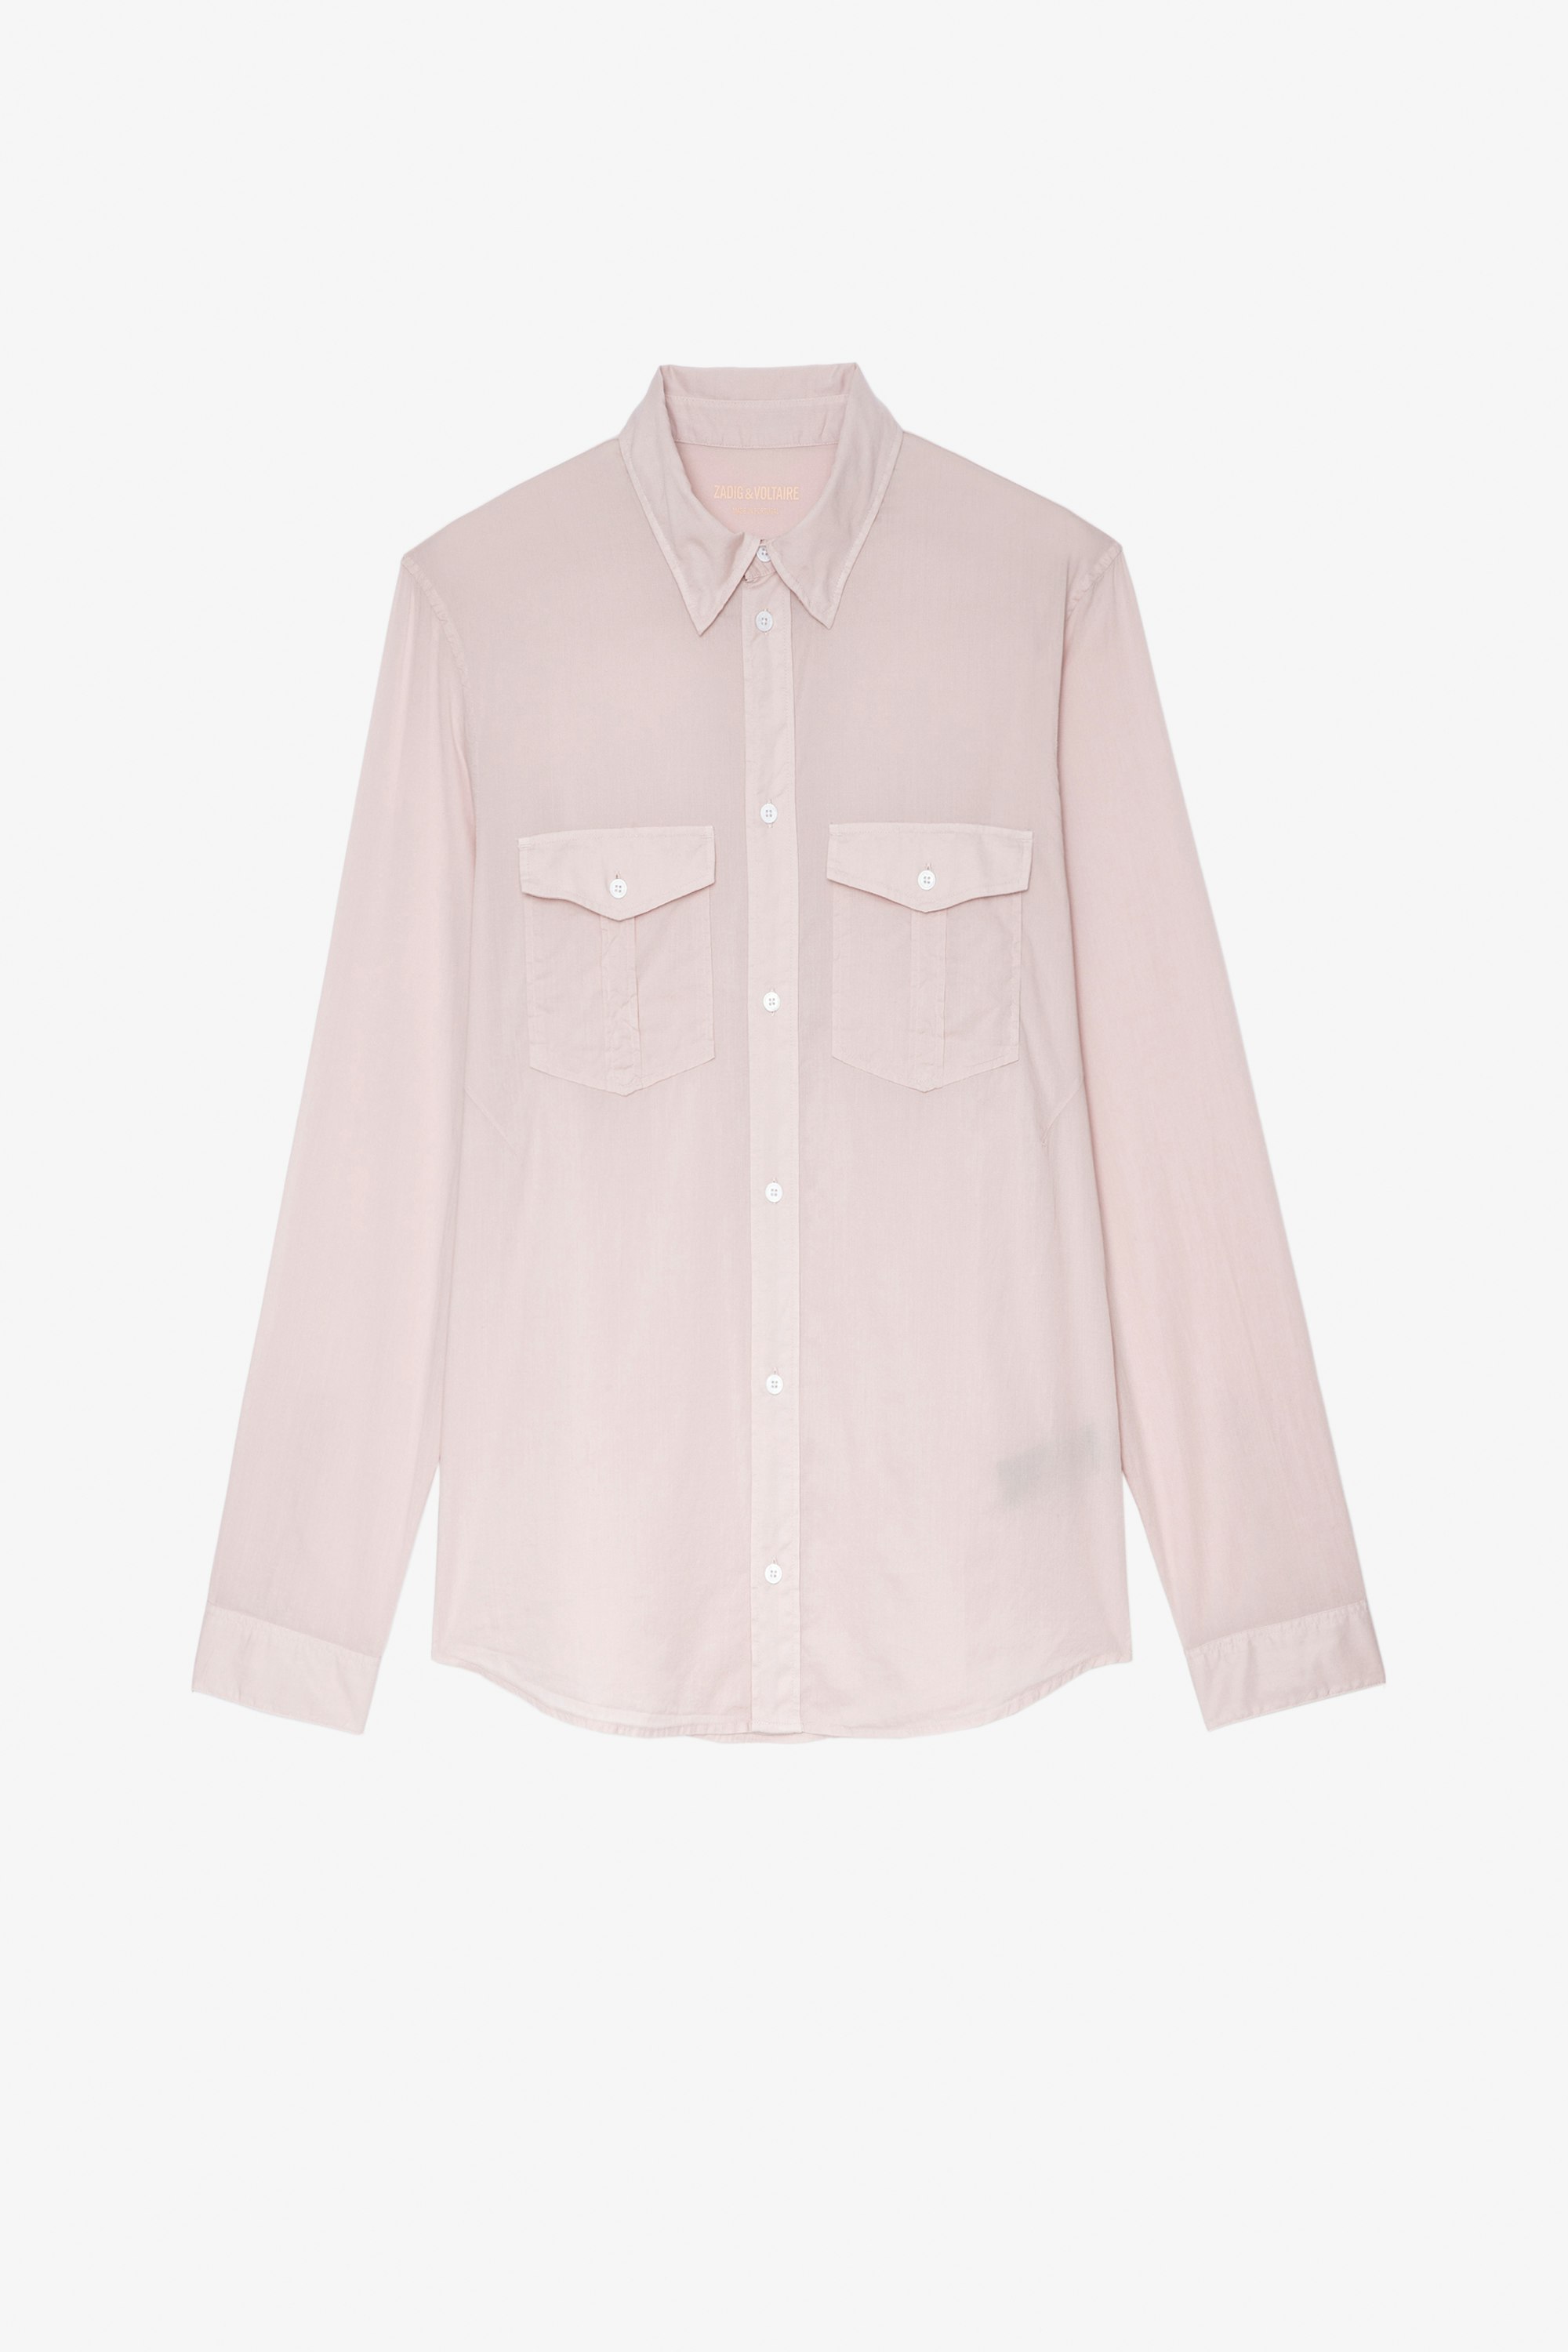 Thibaut Shirt Men's classic shirt in pastel cotton